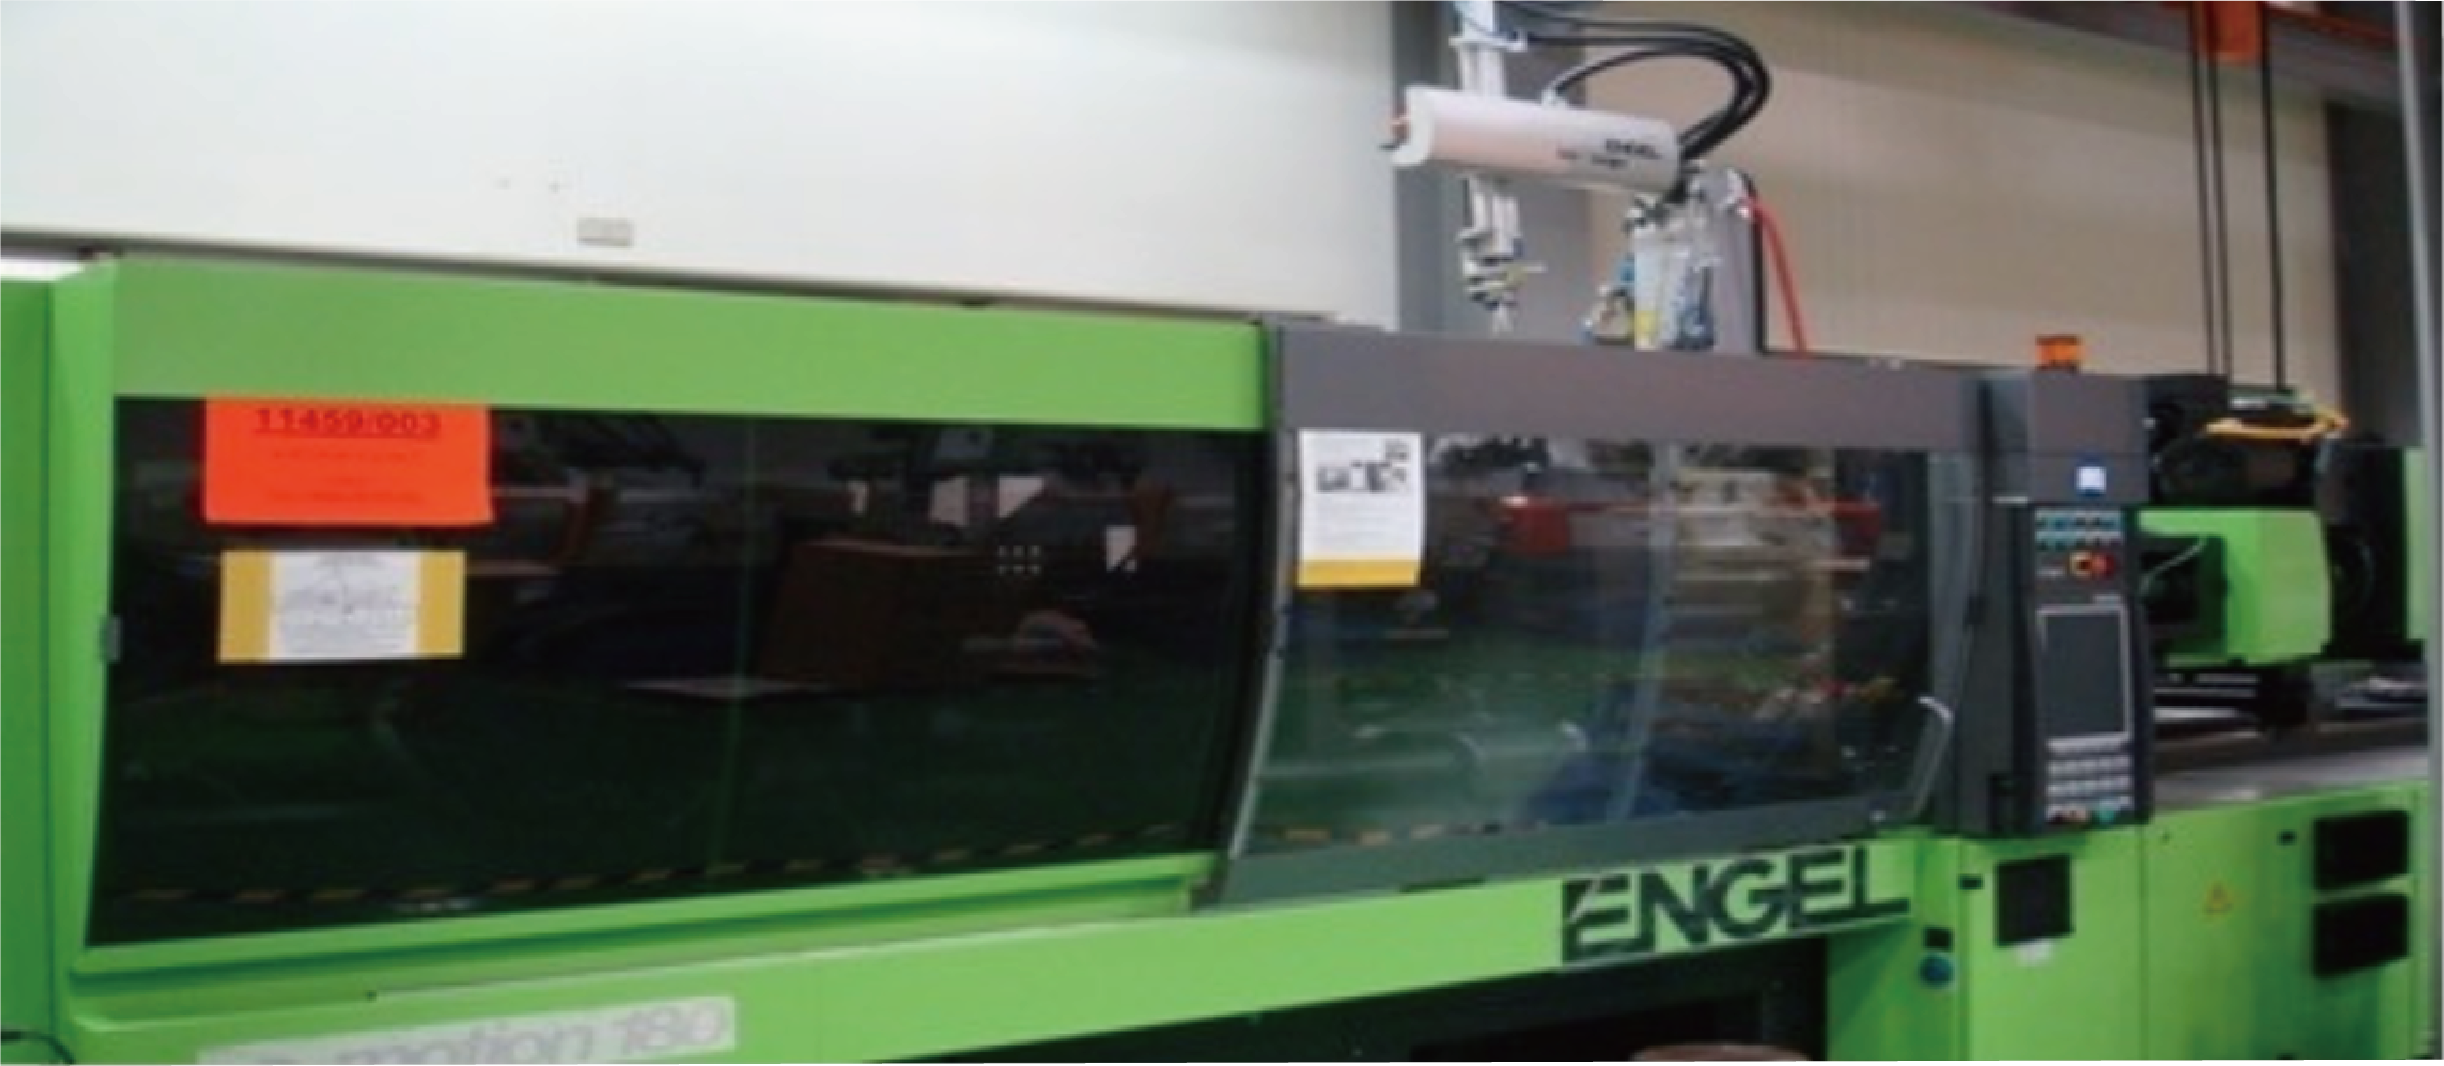 Engel Injection molding machine